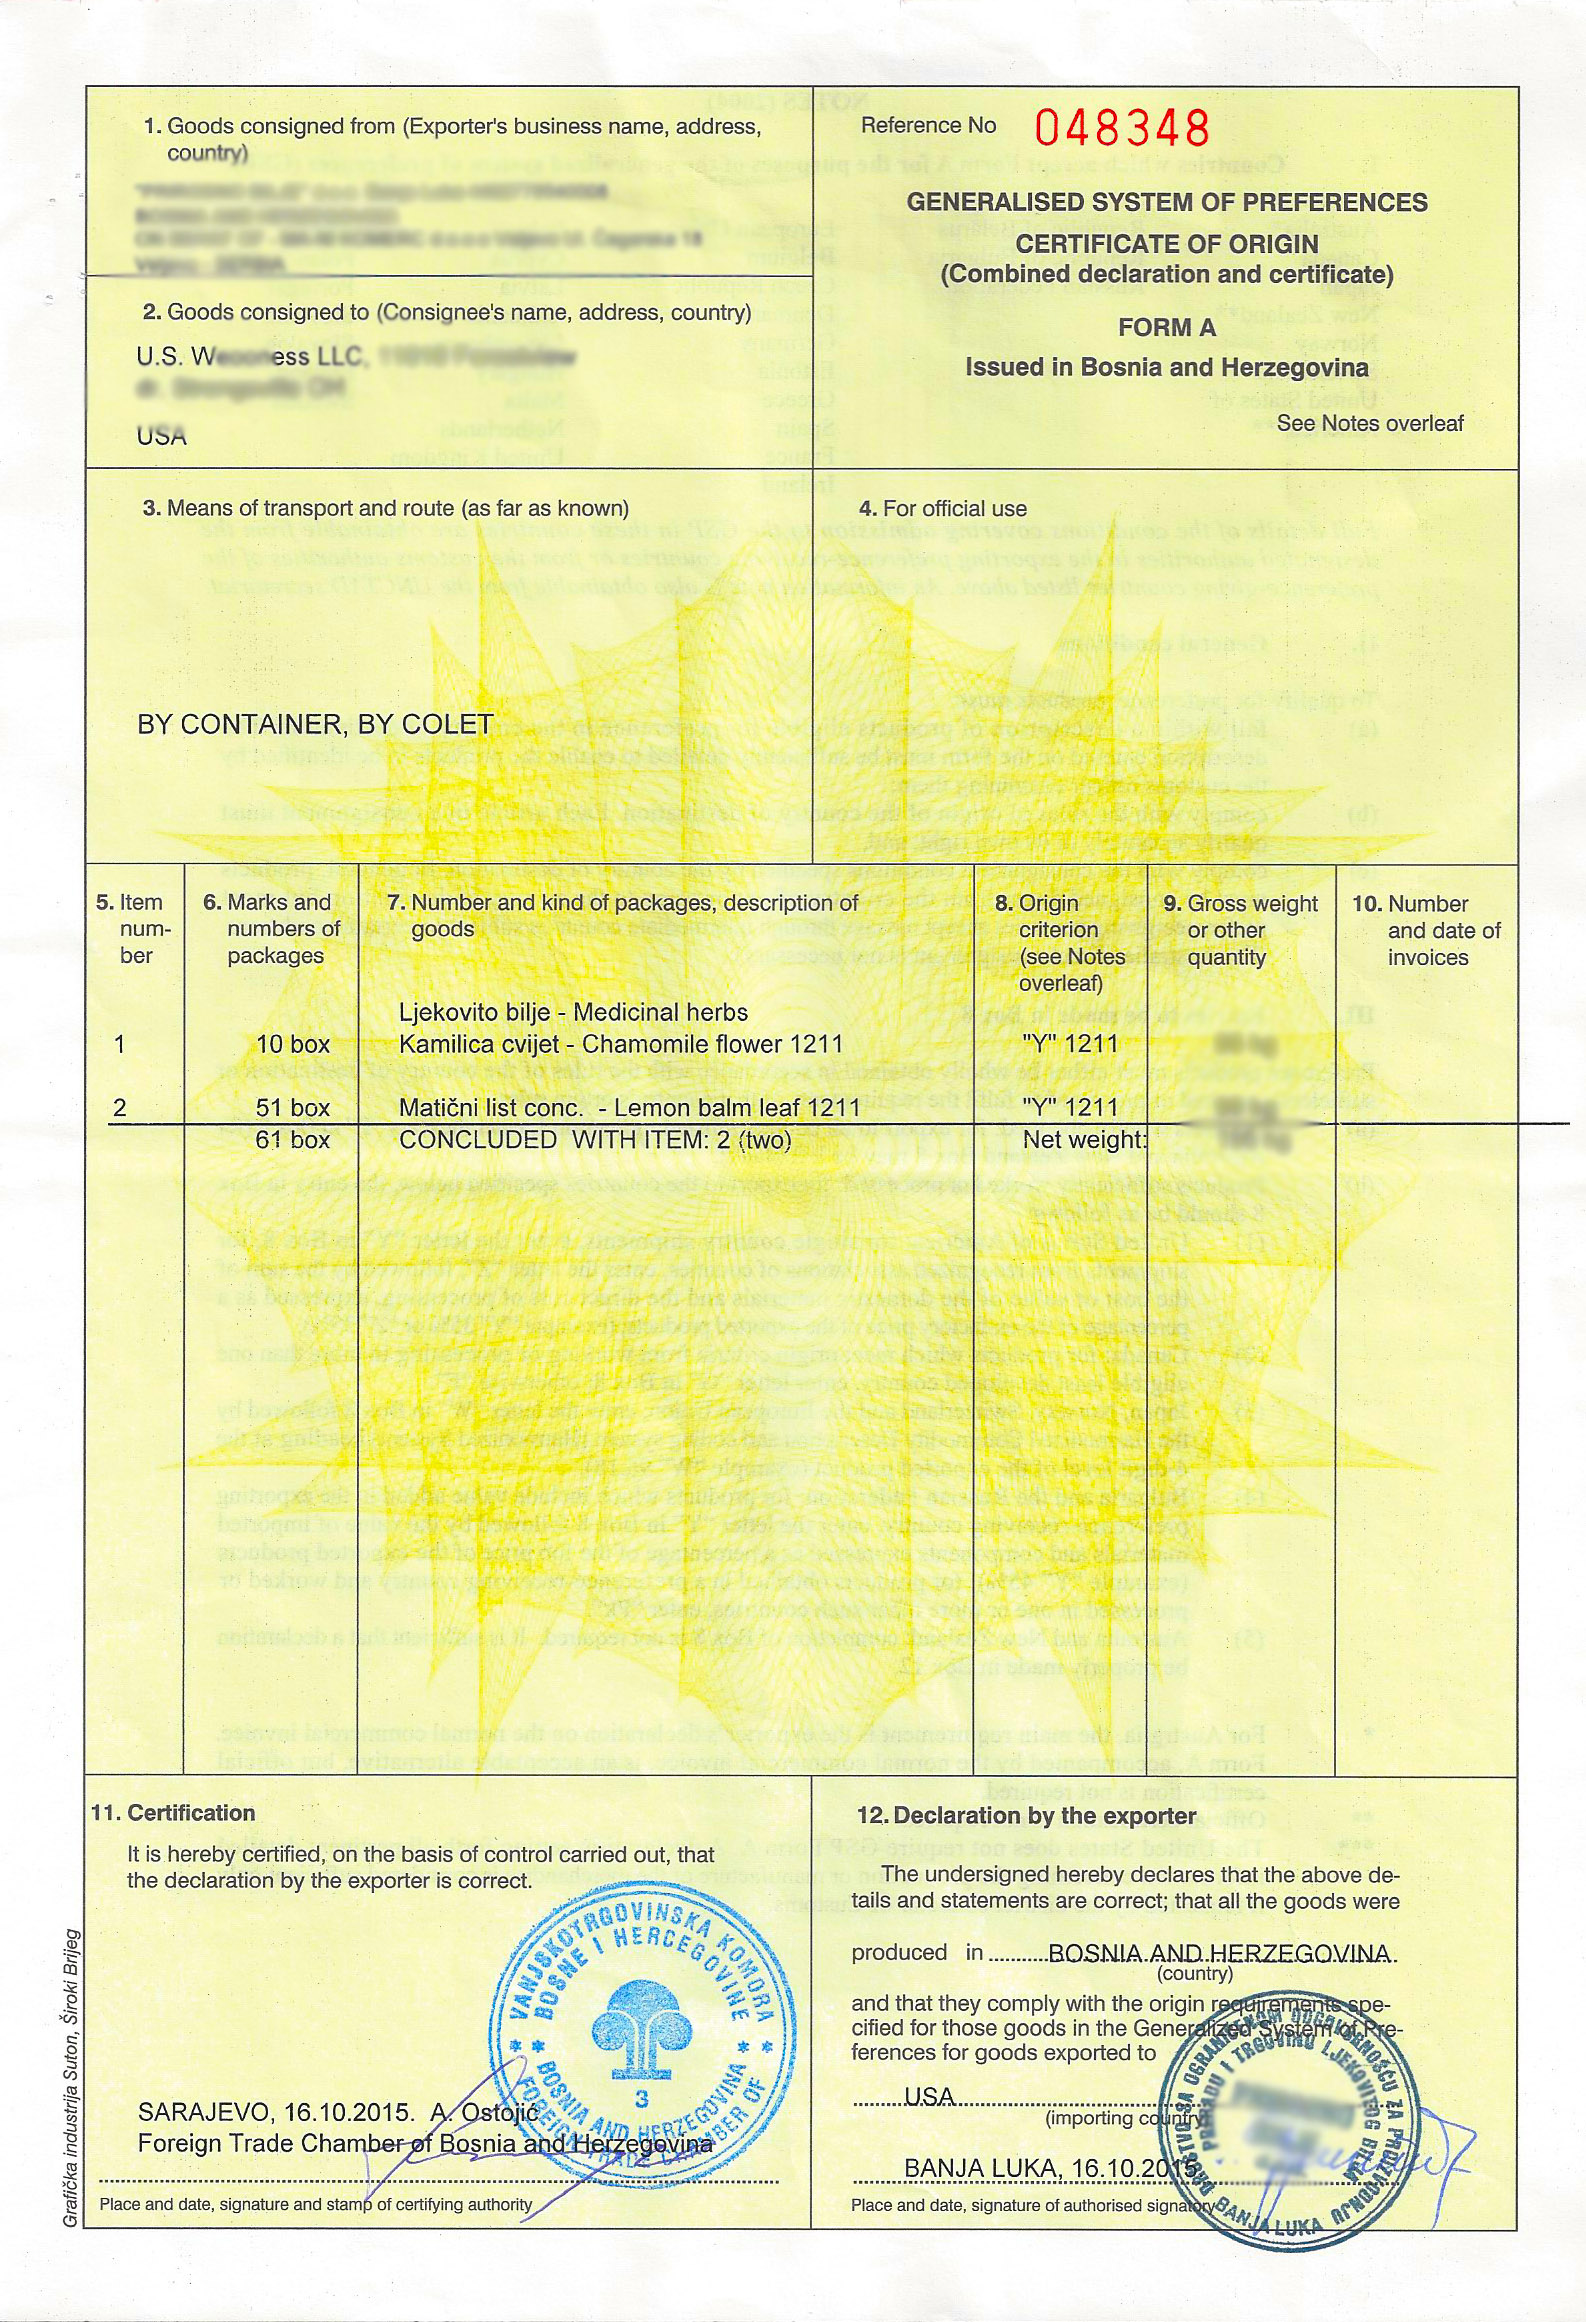 Bosnian From A Certificate Of Origin